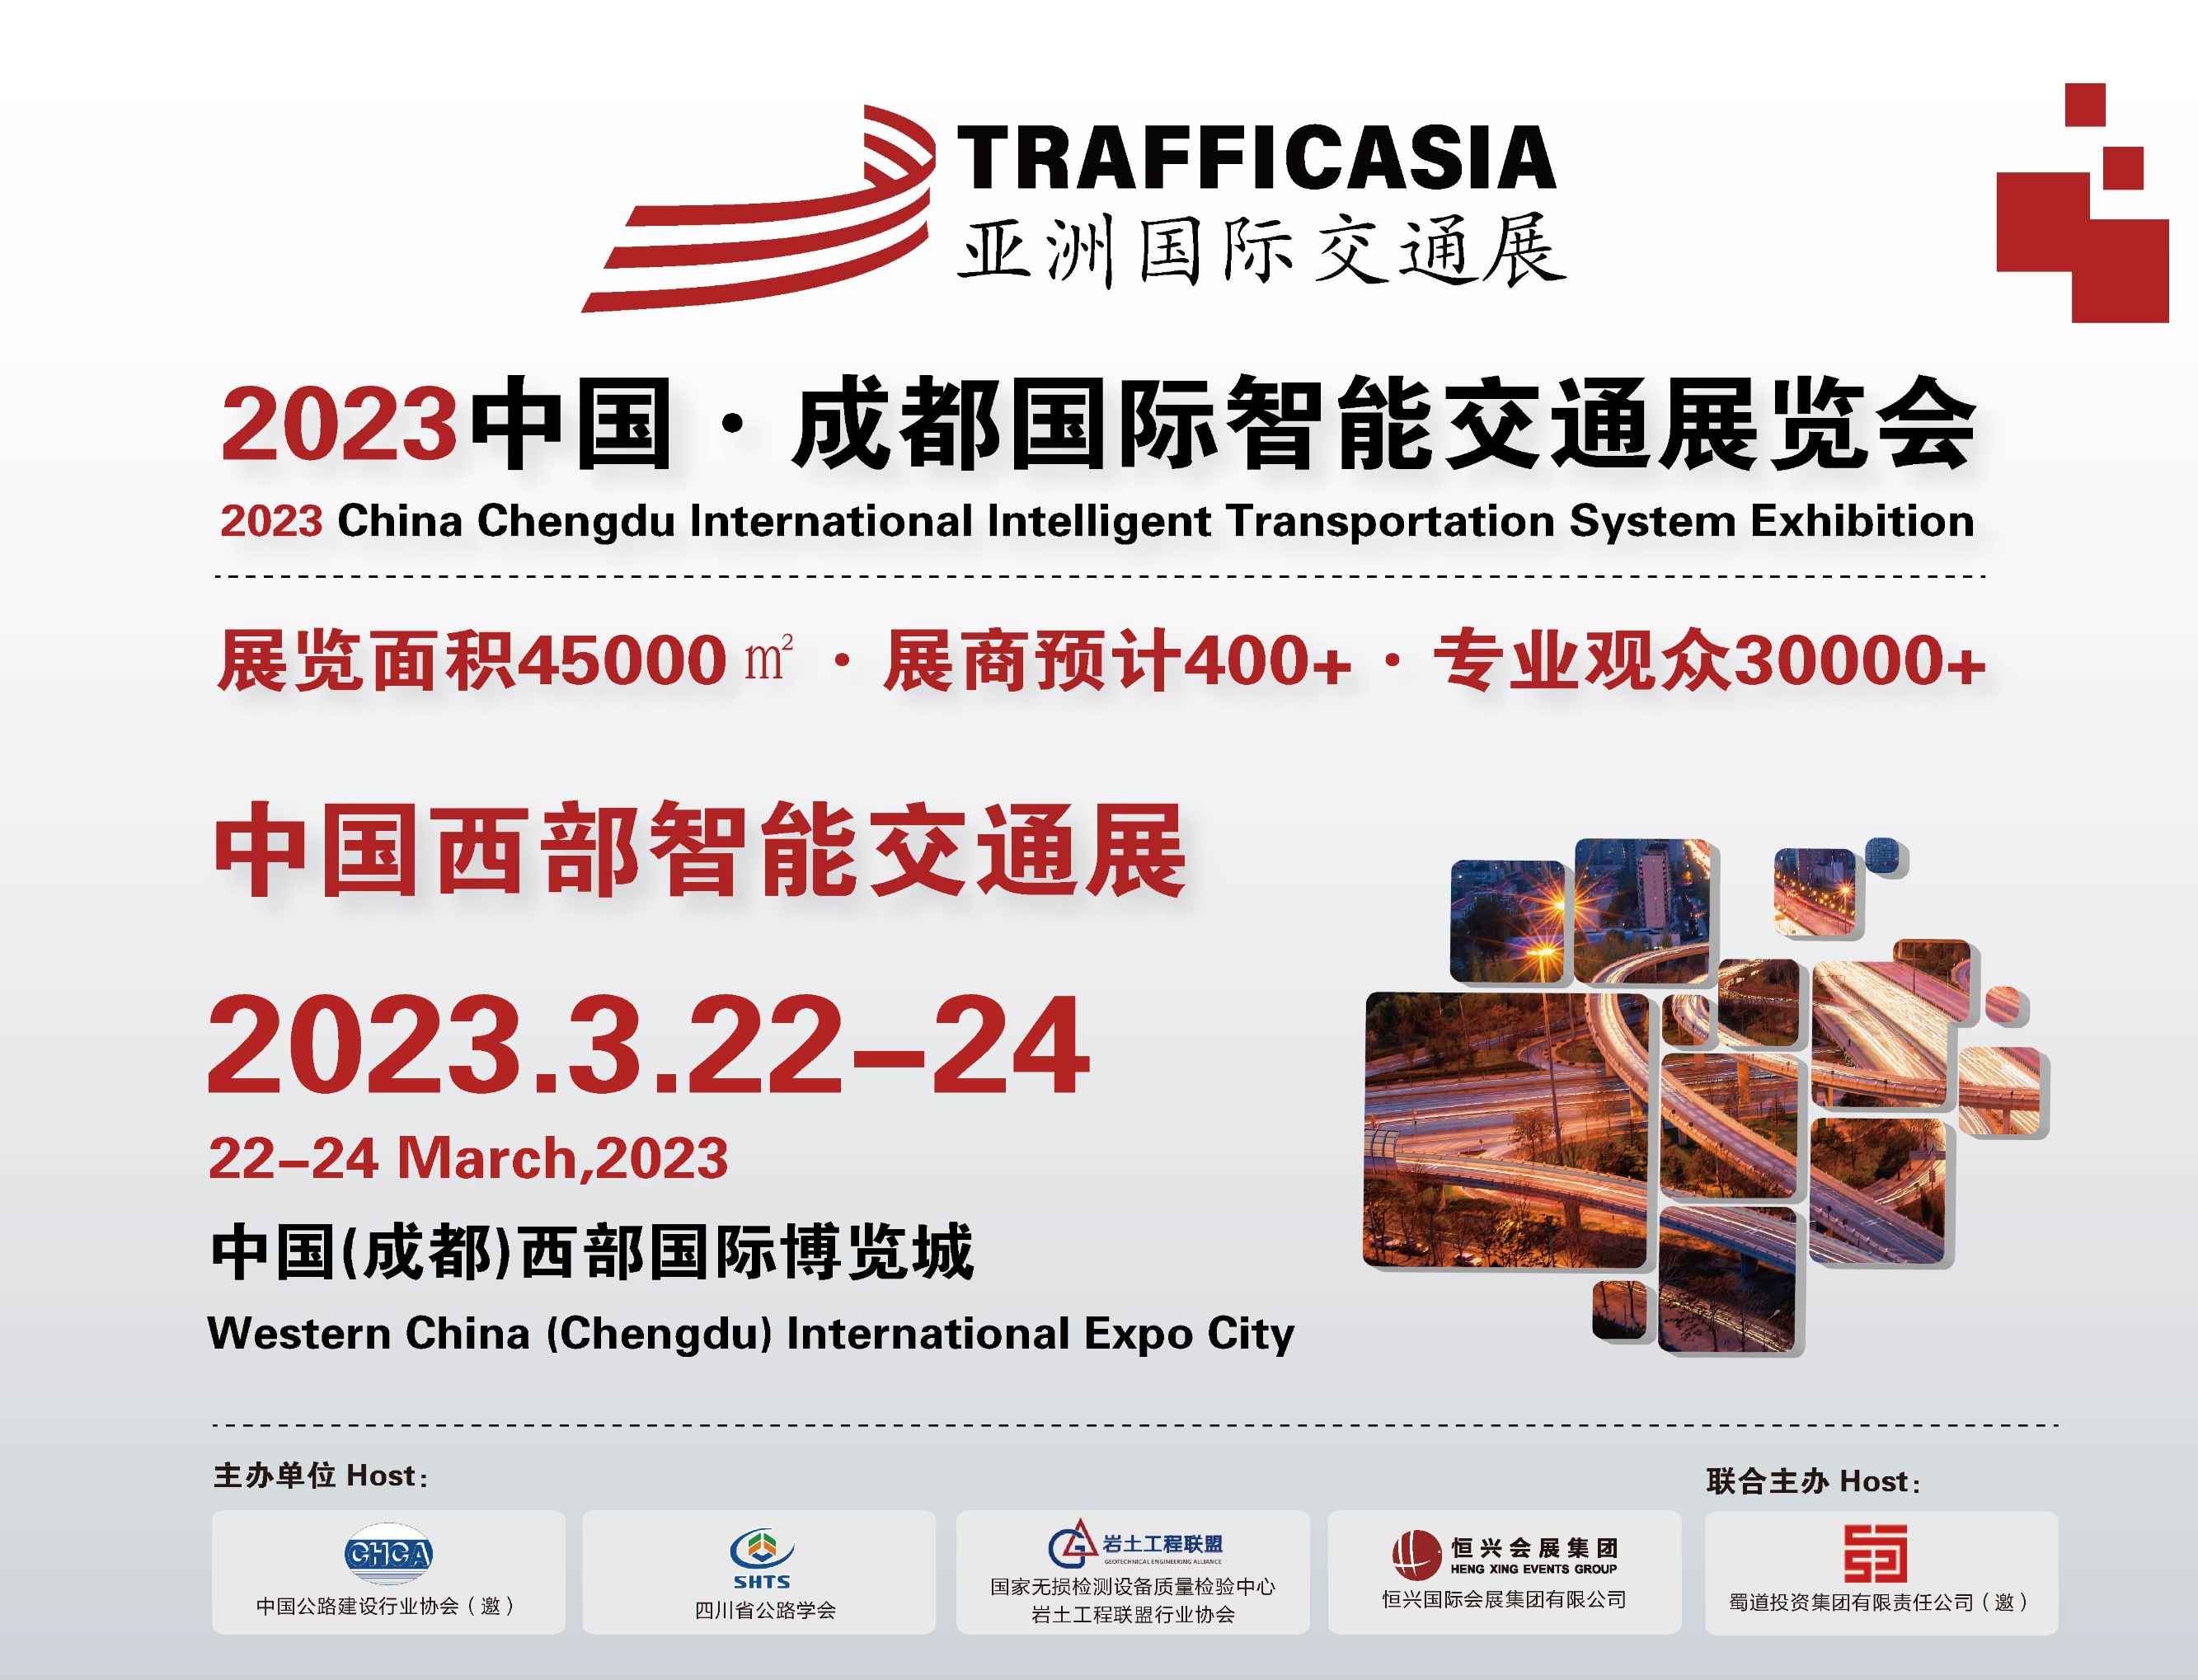 Trafficasia 2023中国·成都国际智能交通展览会